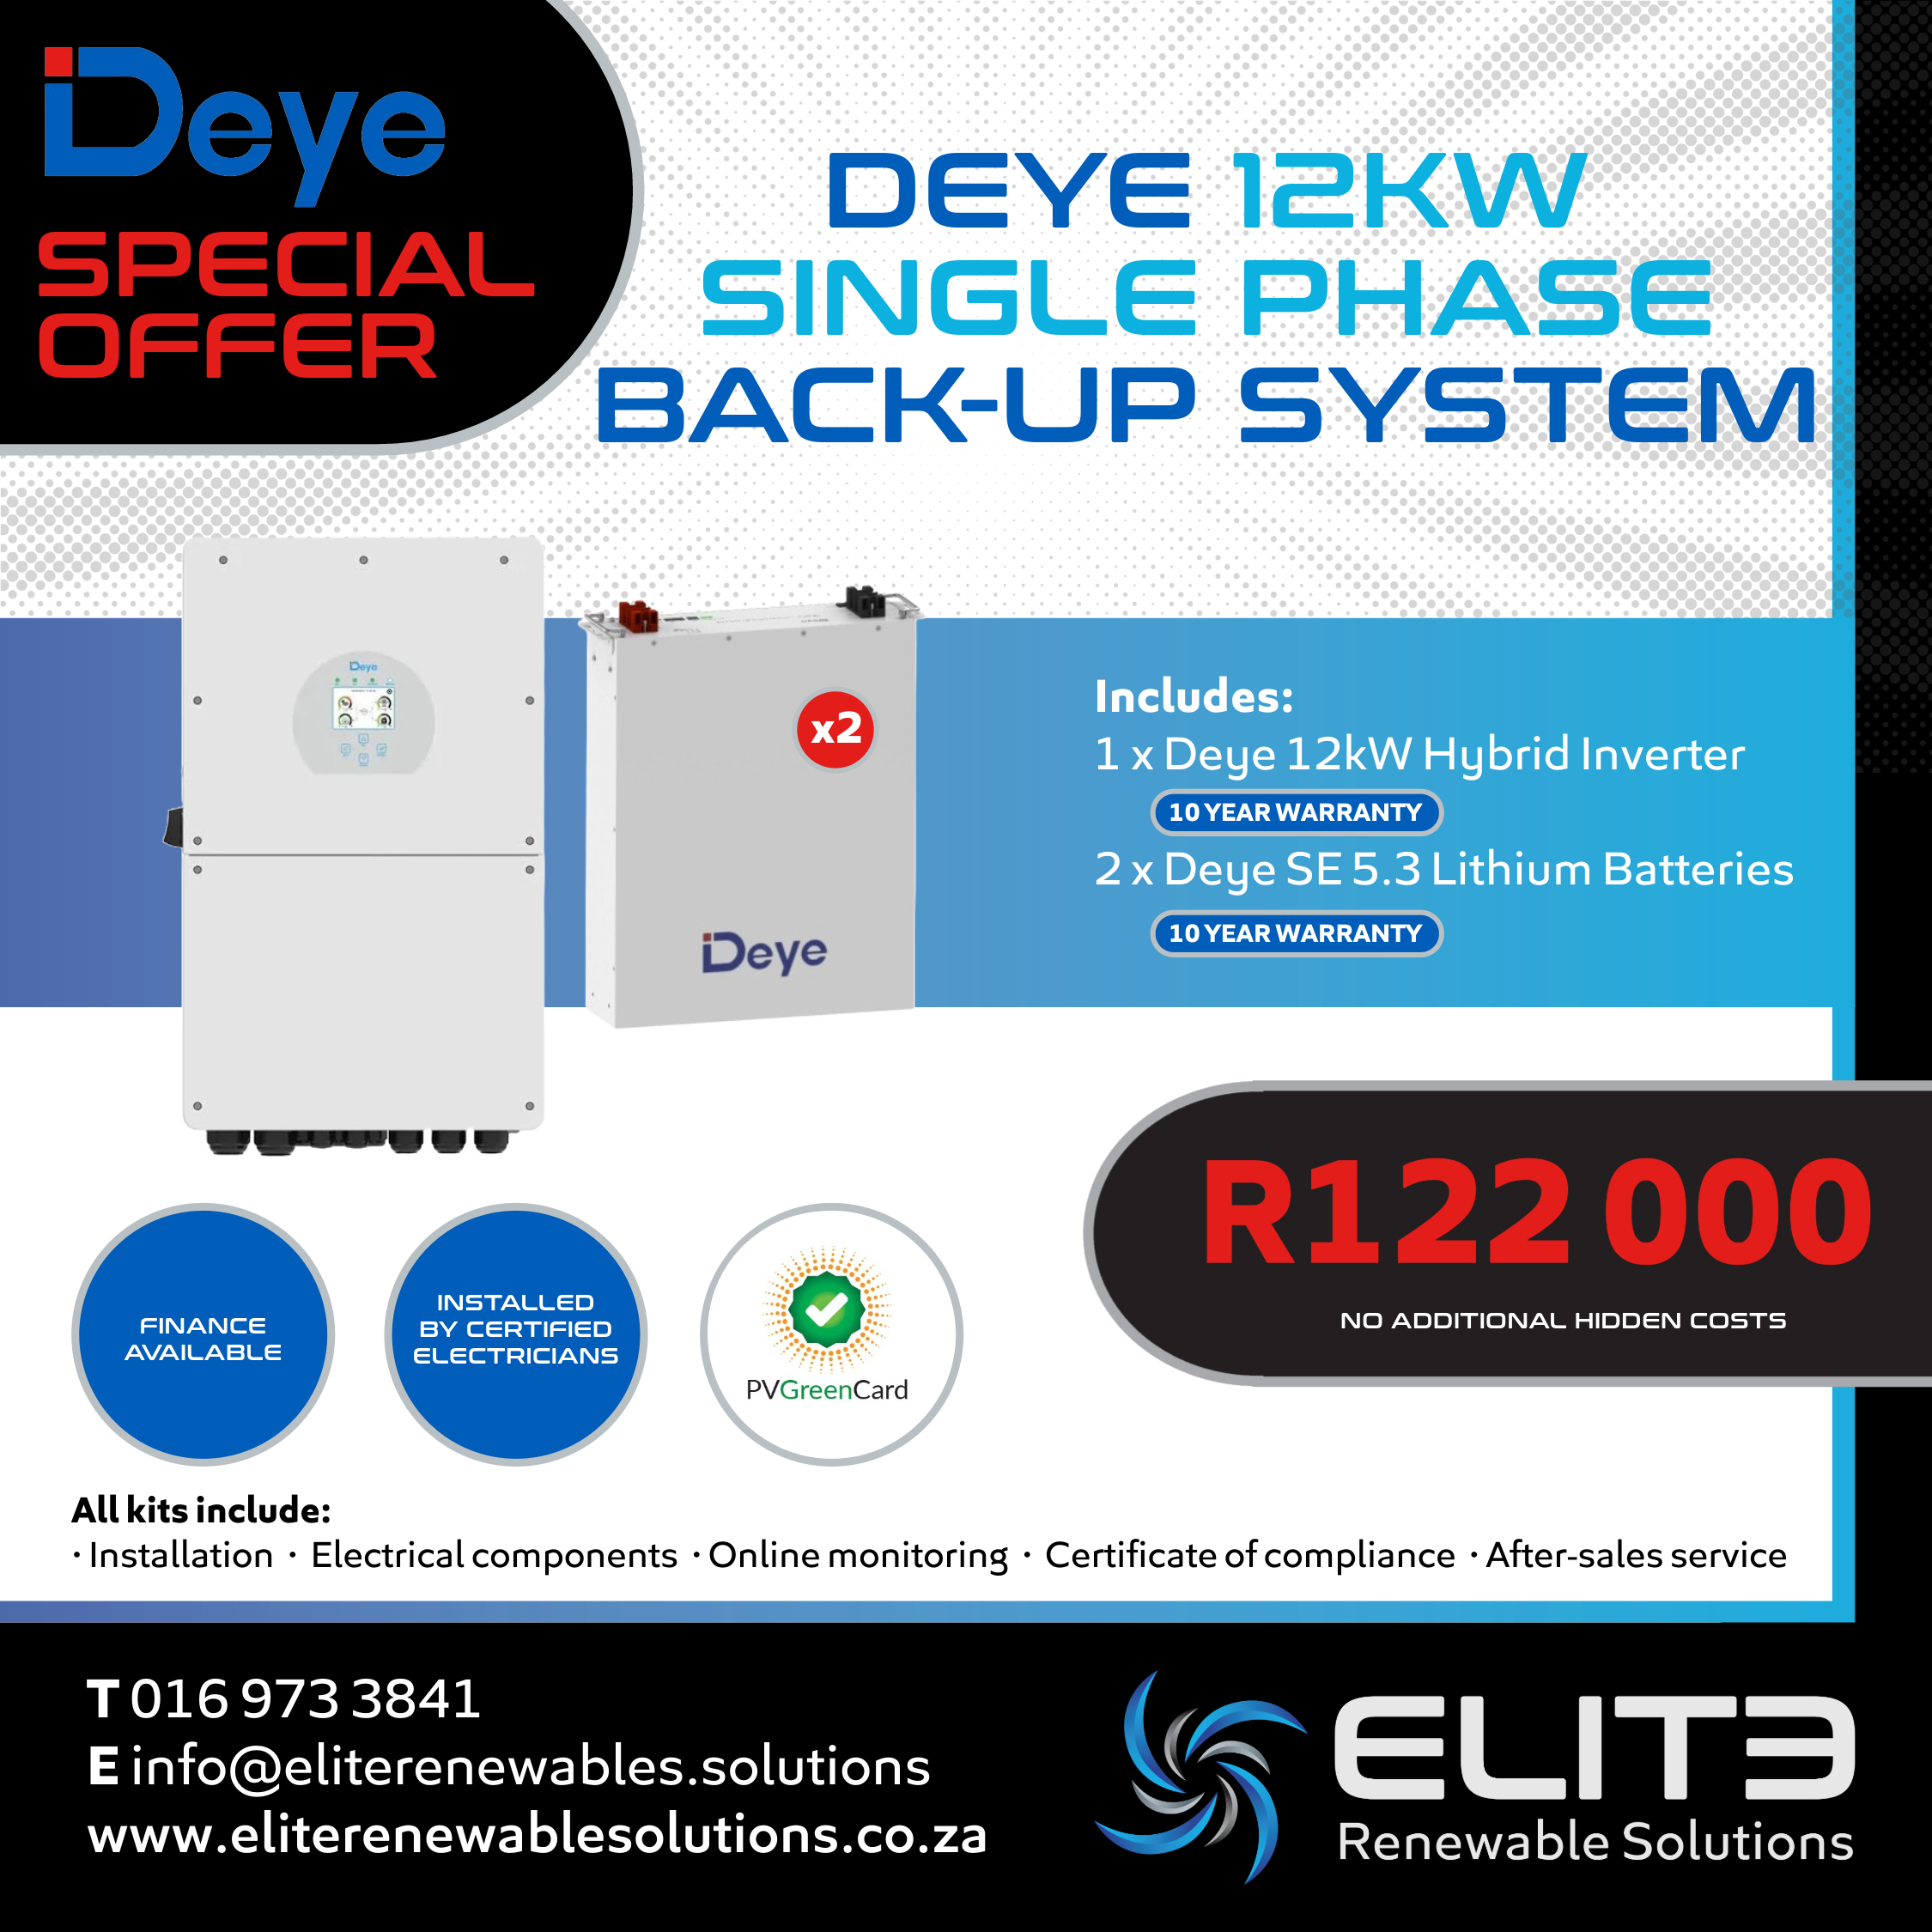 Deye 12Kw Single Phase Back-Up System - Elite Renewable Solutions